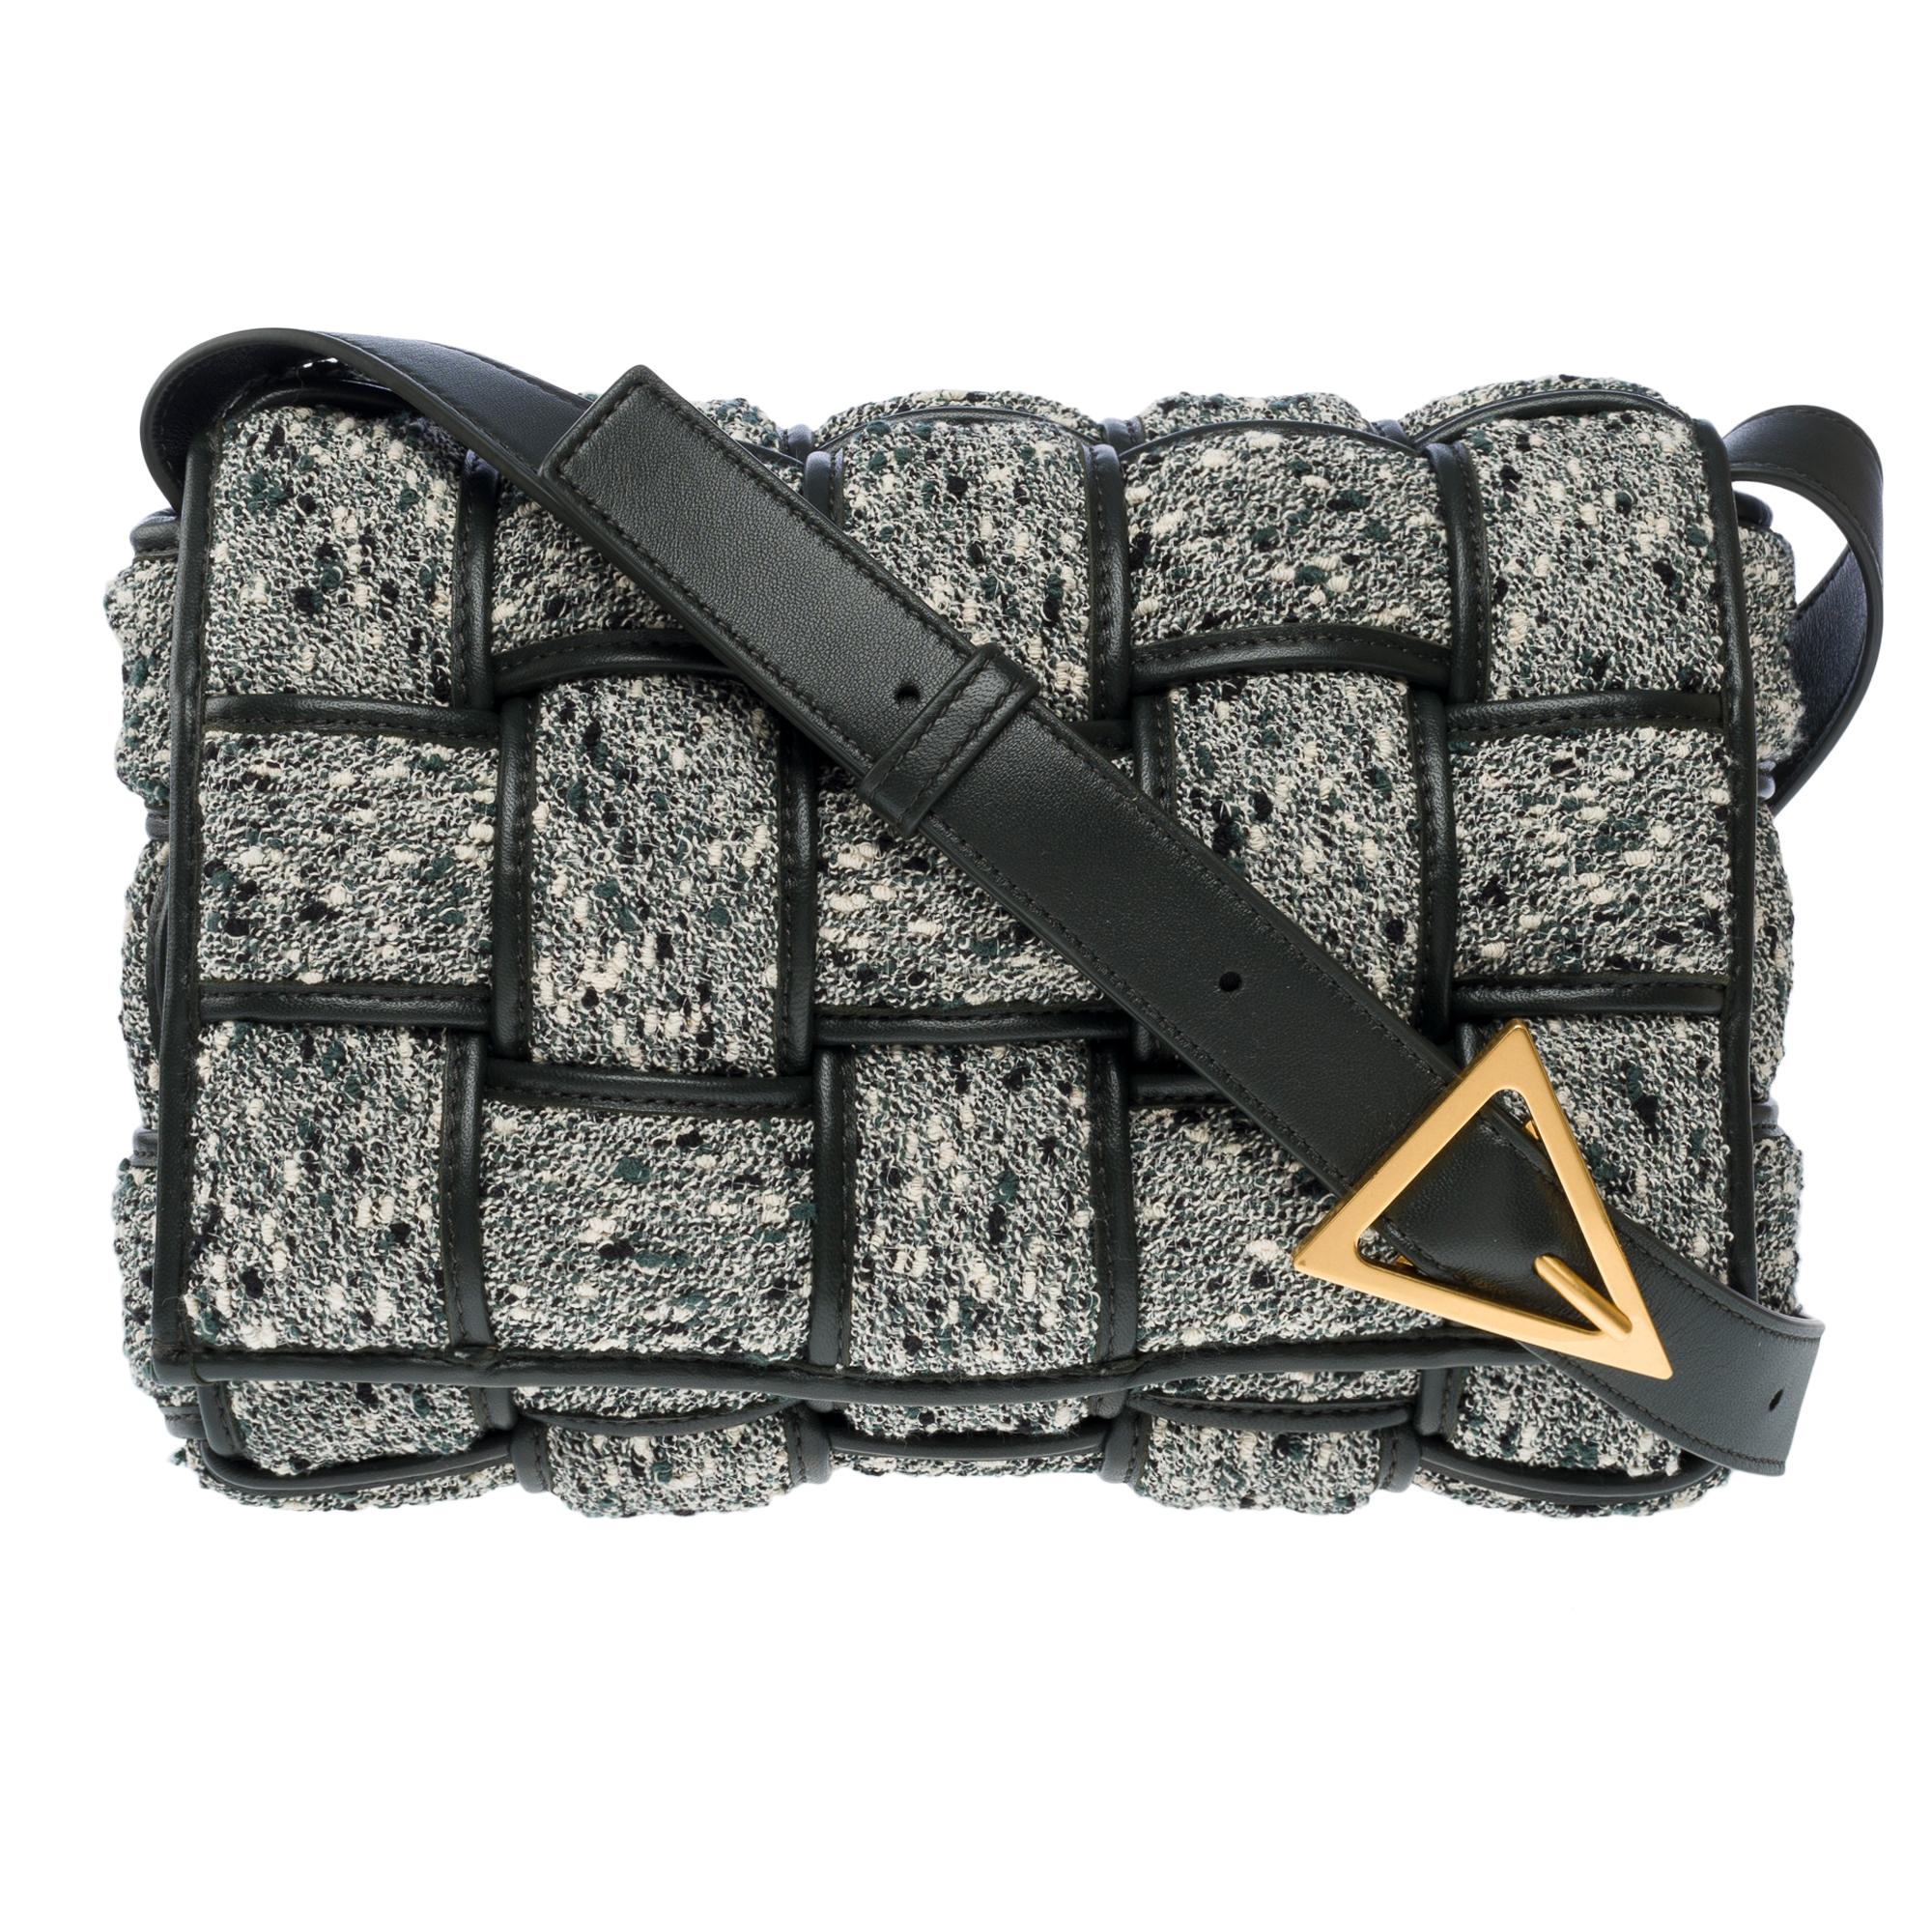 Bottega Veneta Cassette 25 shoulder bag in grey and green Tweed, GHW In New Condition For Sale In Paris, IDF